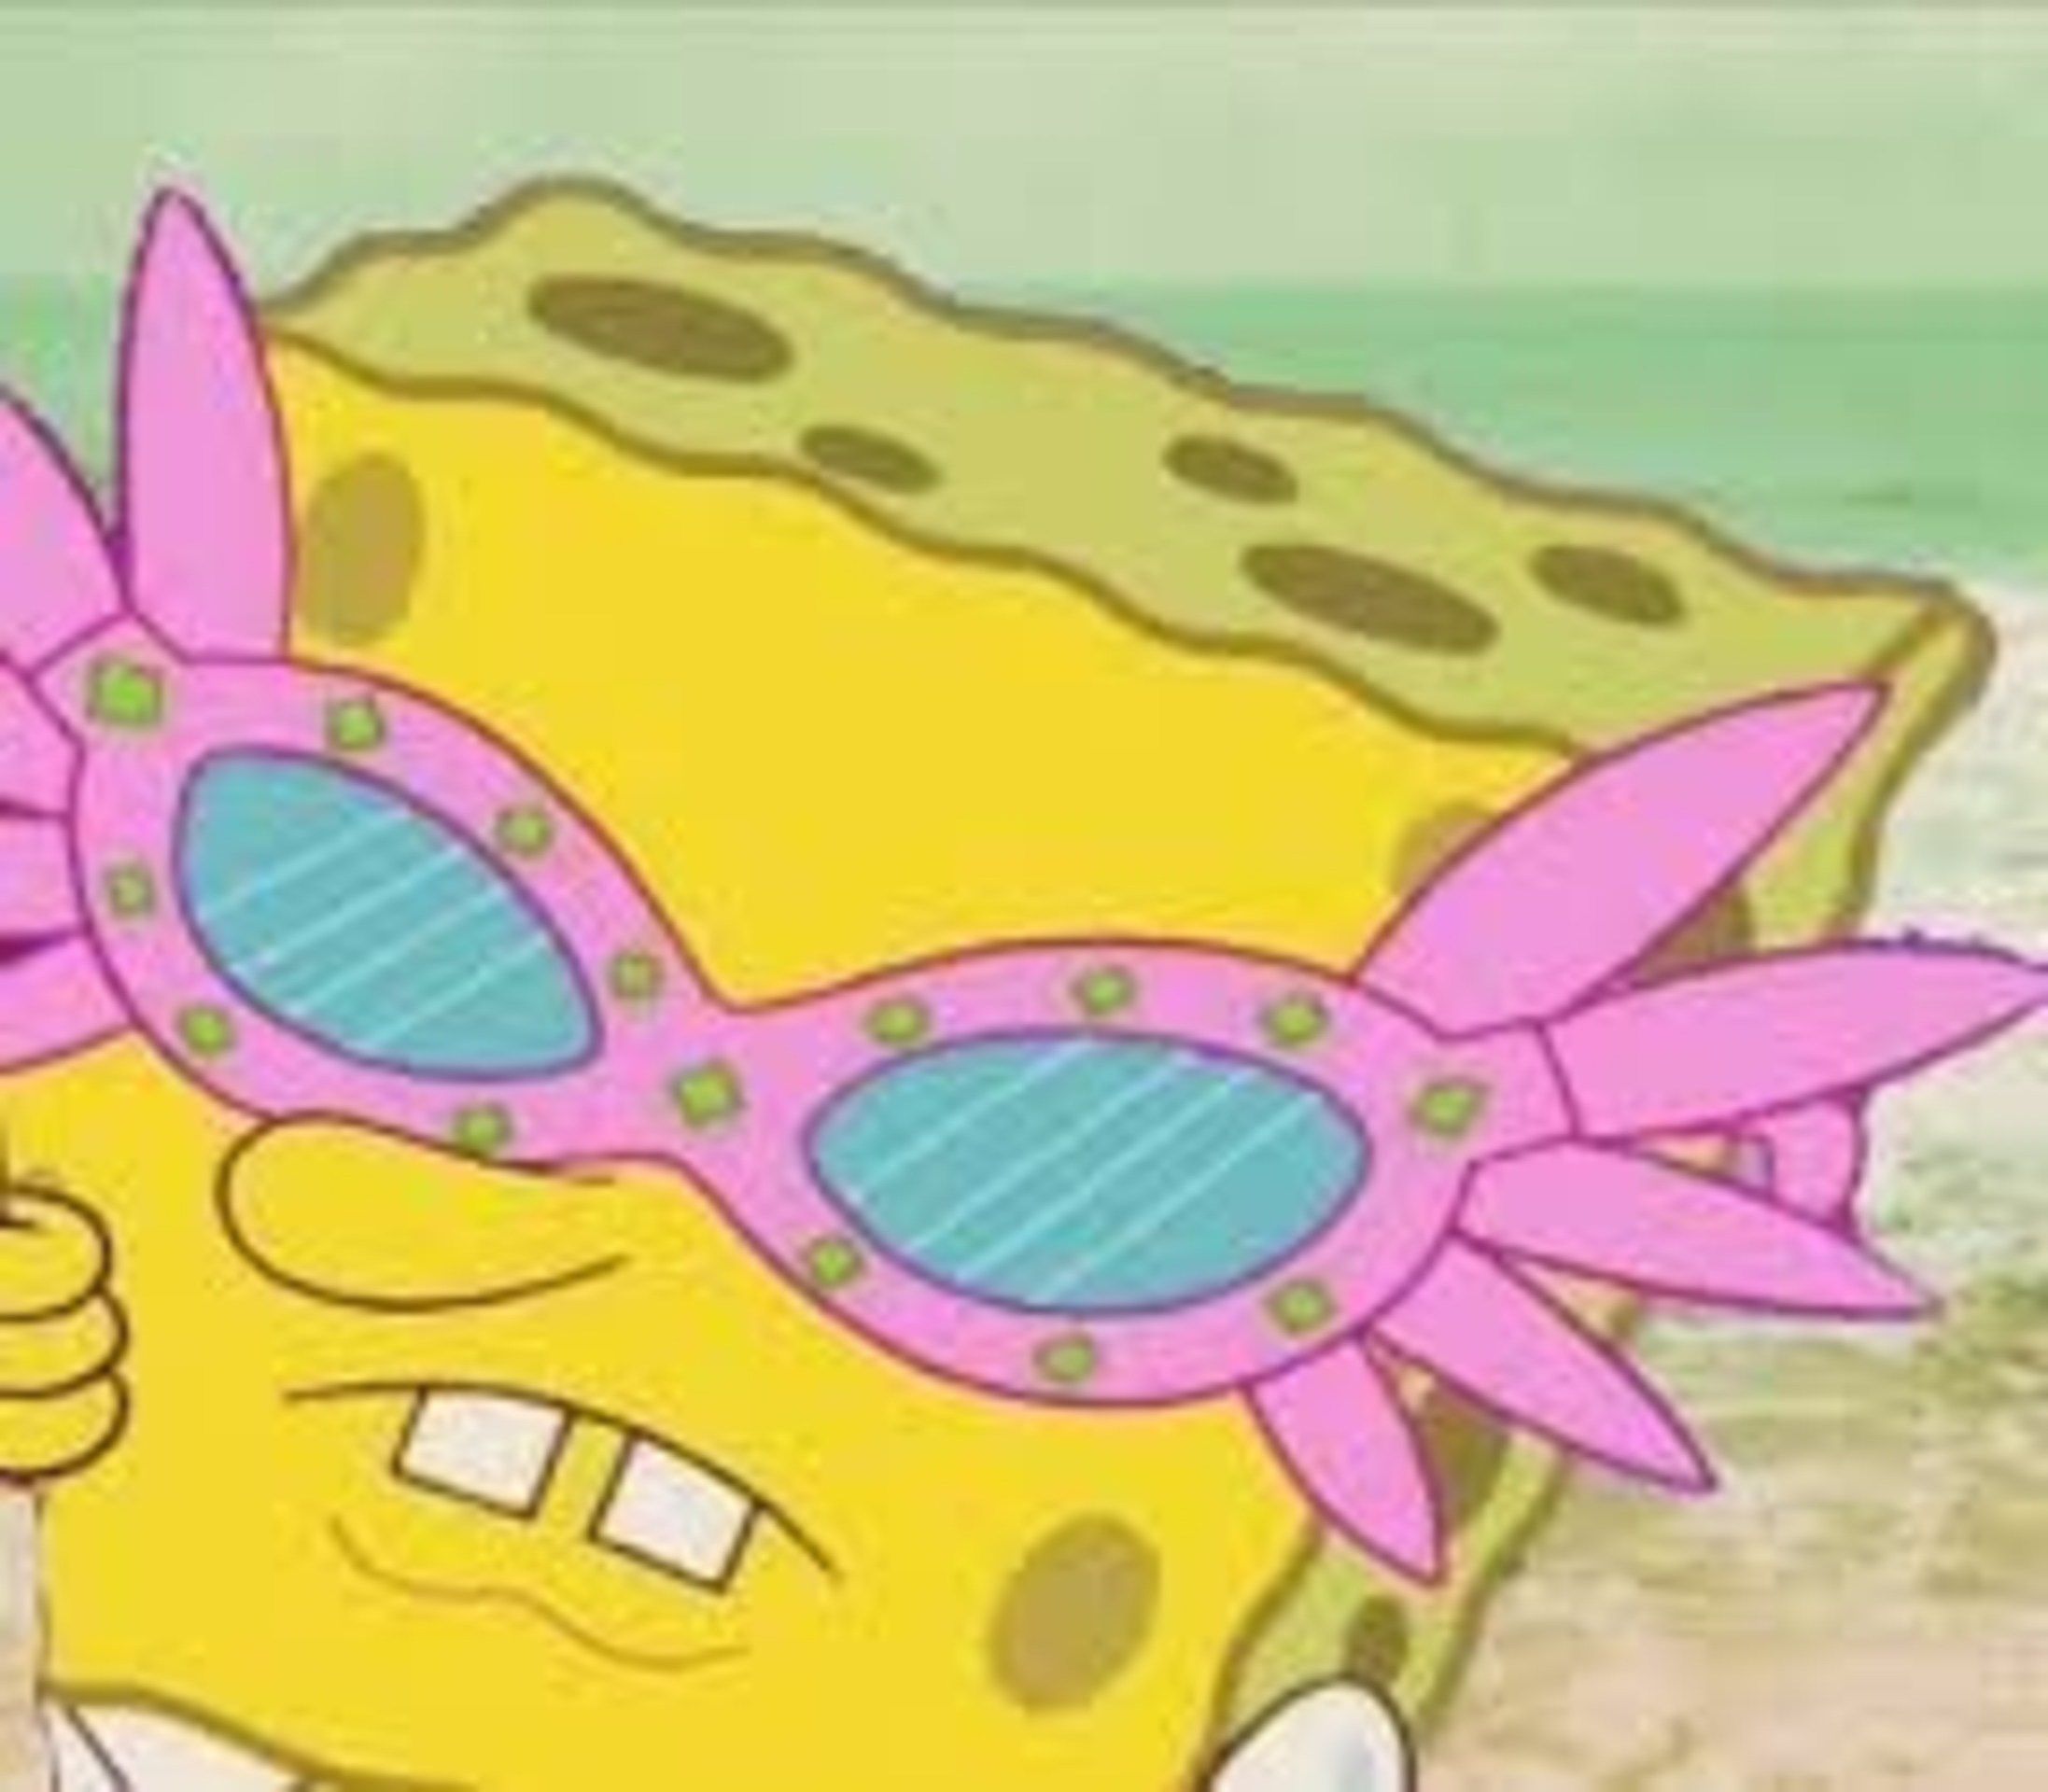 A picture of SpongeBob SquarePants wearing pink sunglasses. - SpongeBob